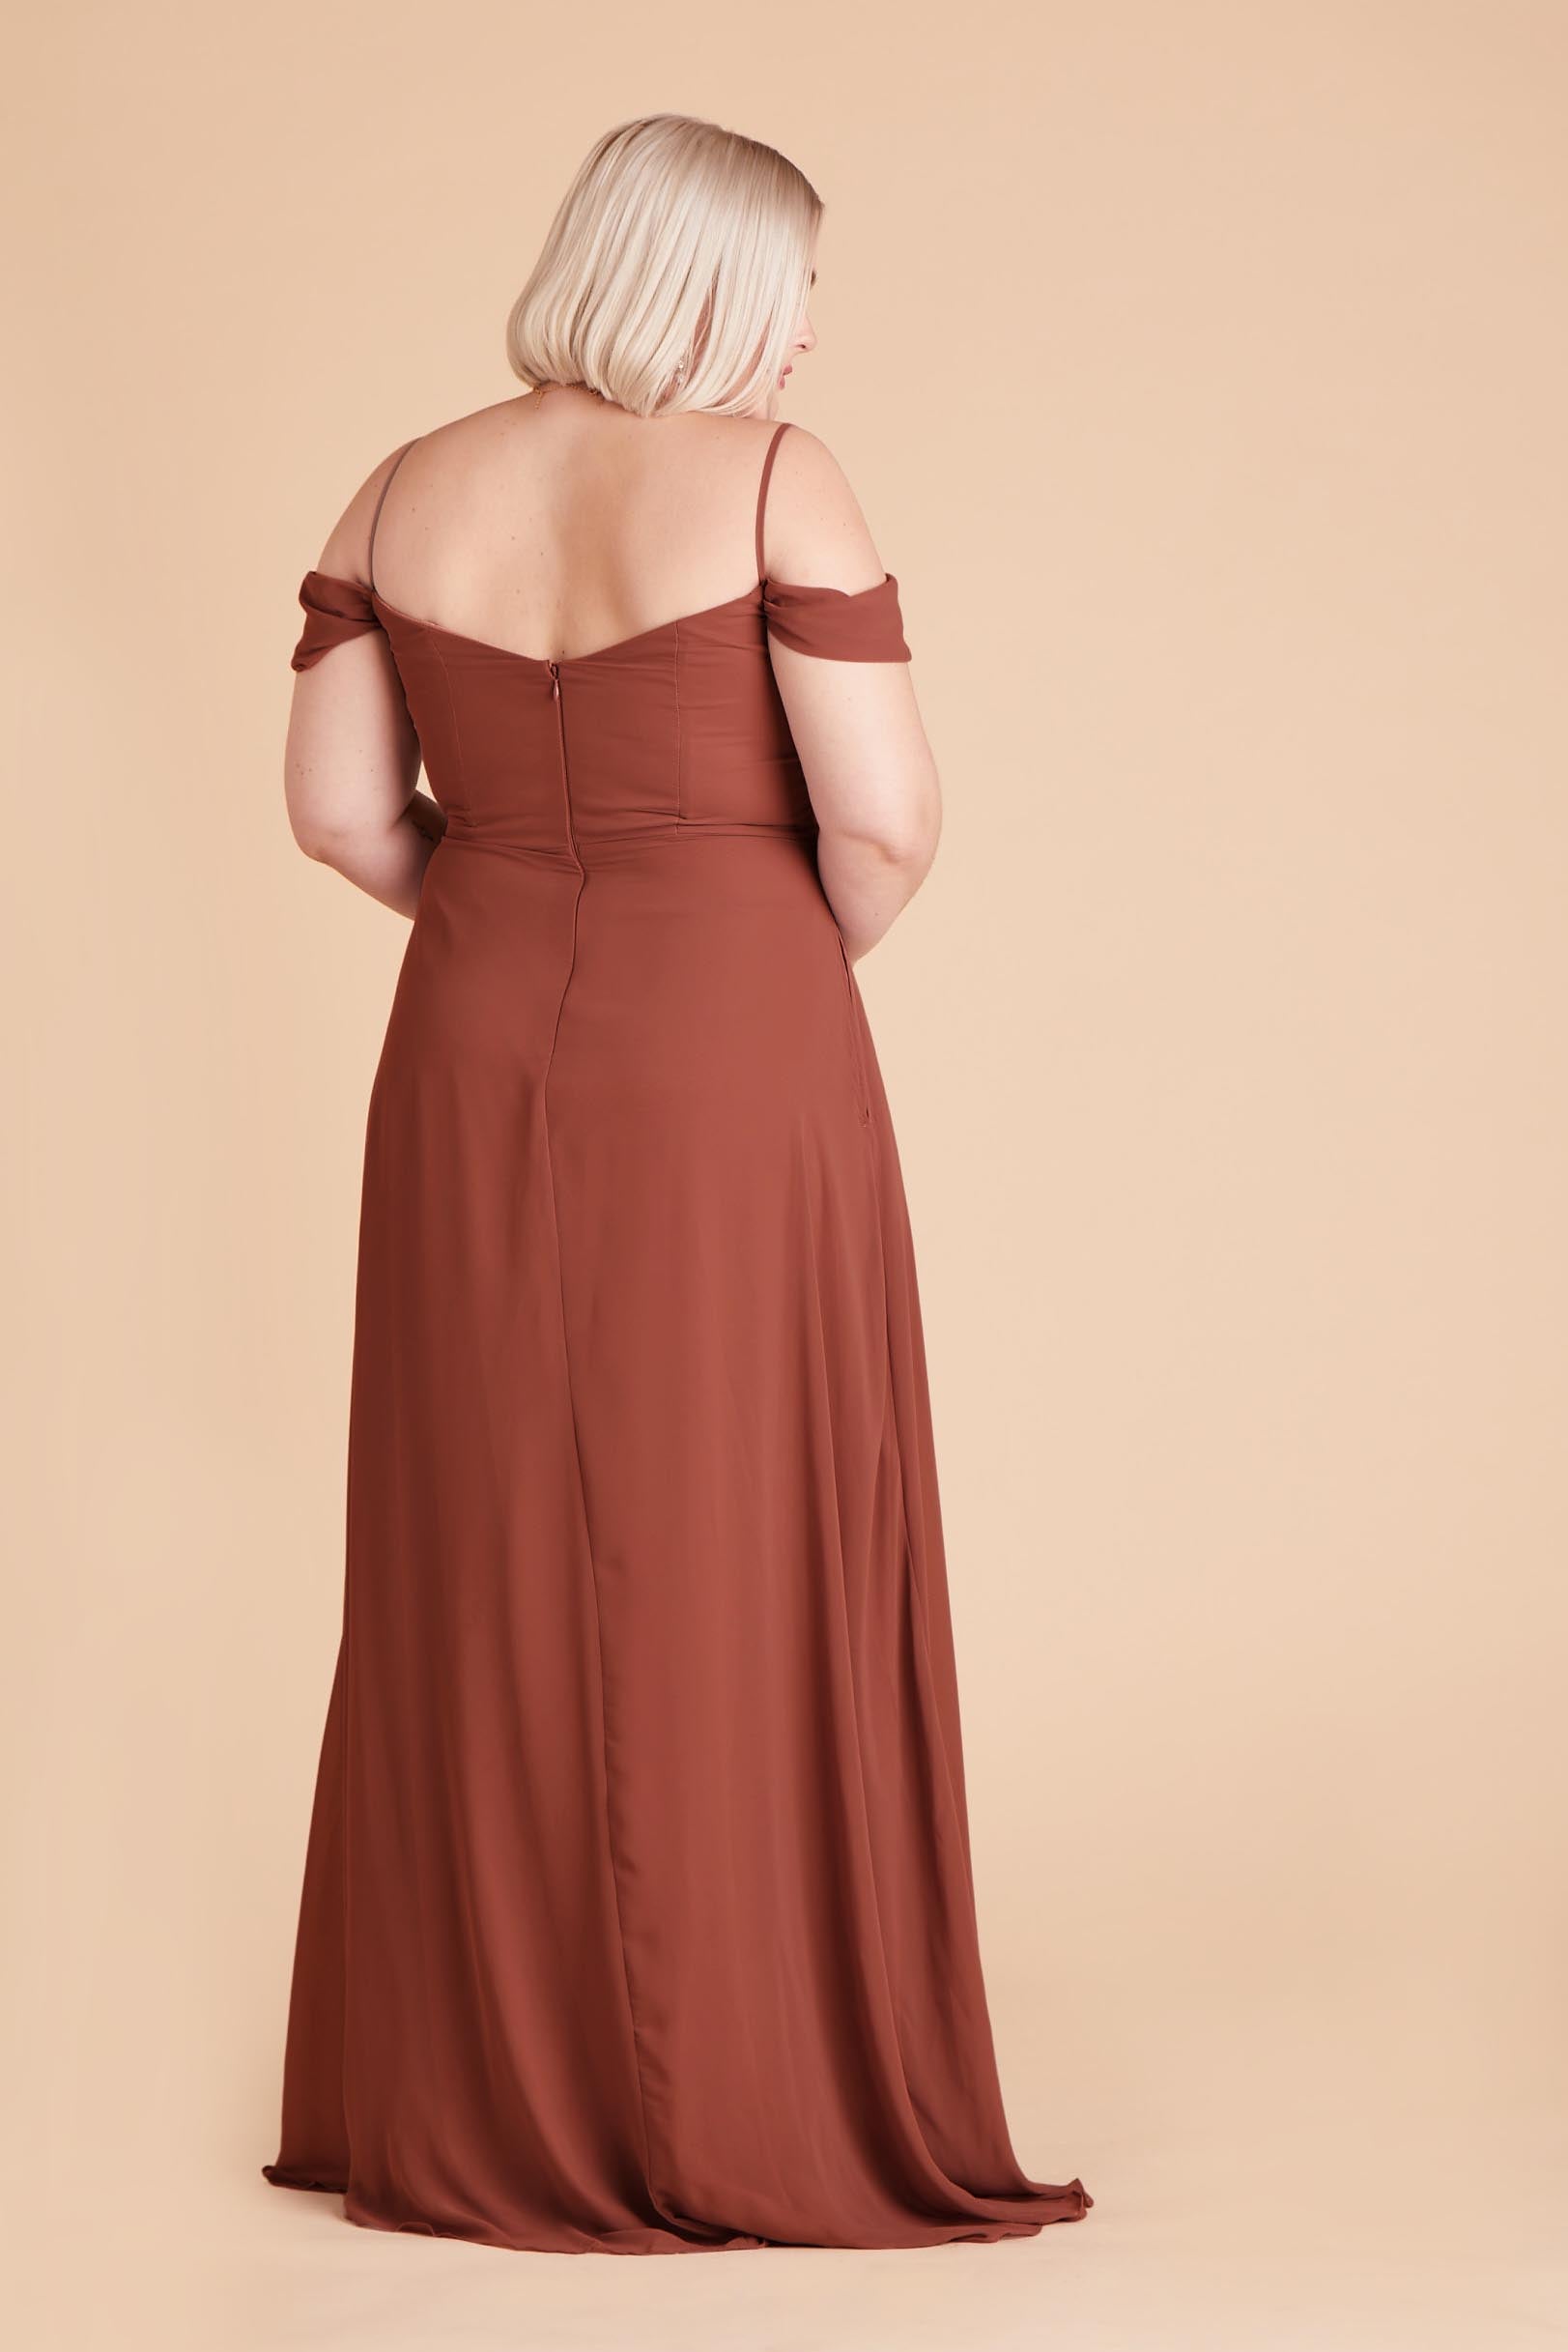 Desert Rose Spence Convertible Dress by Birdy Grey